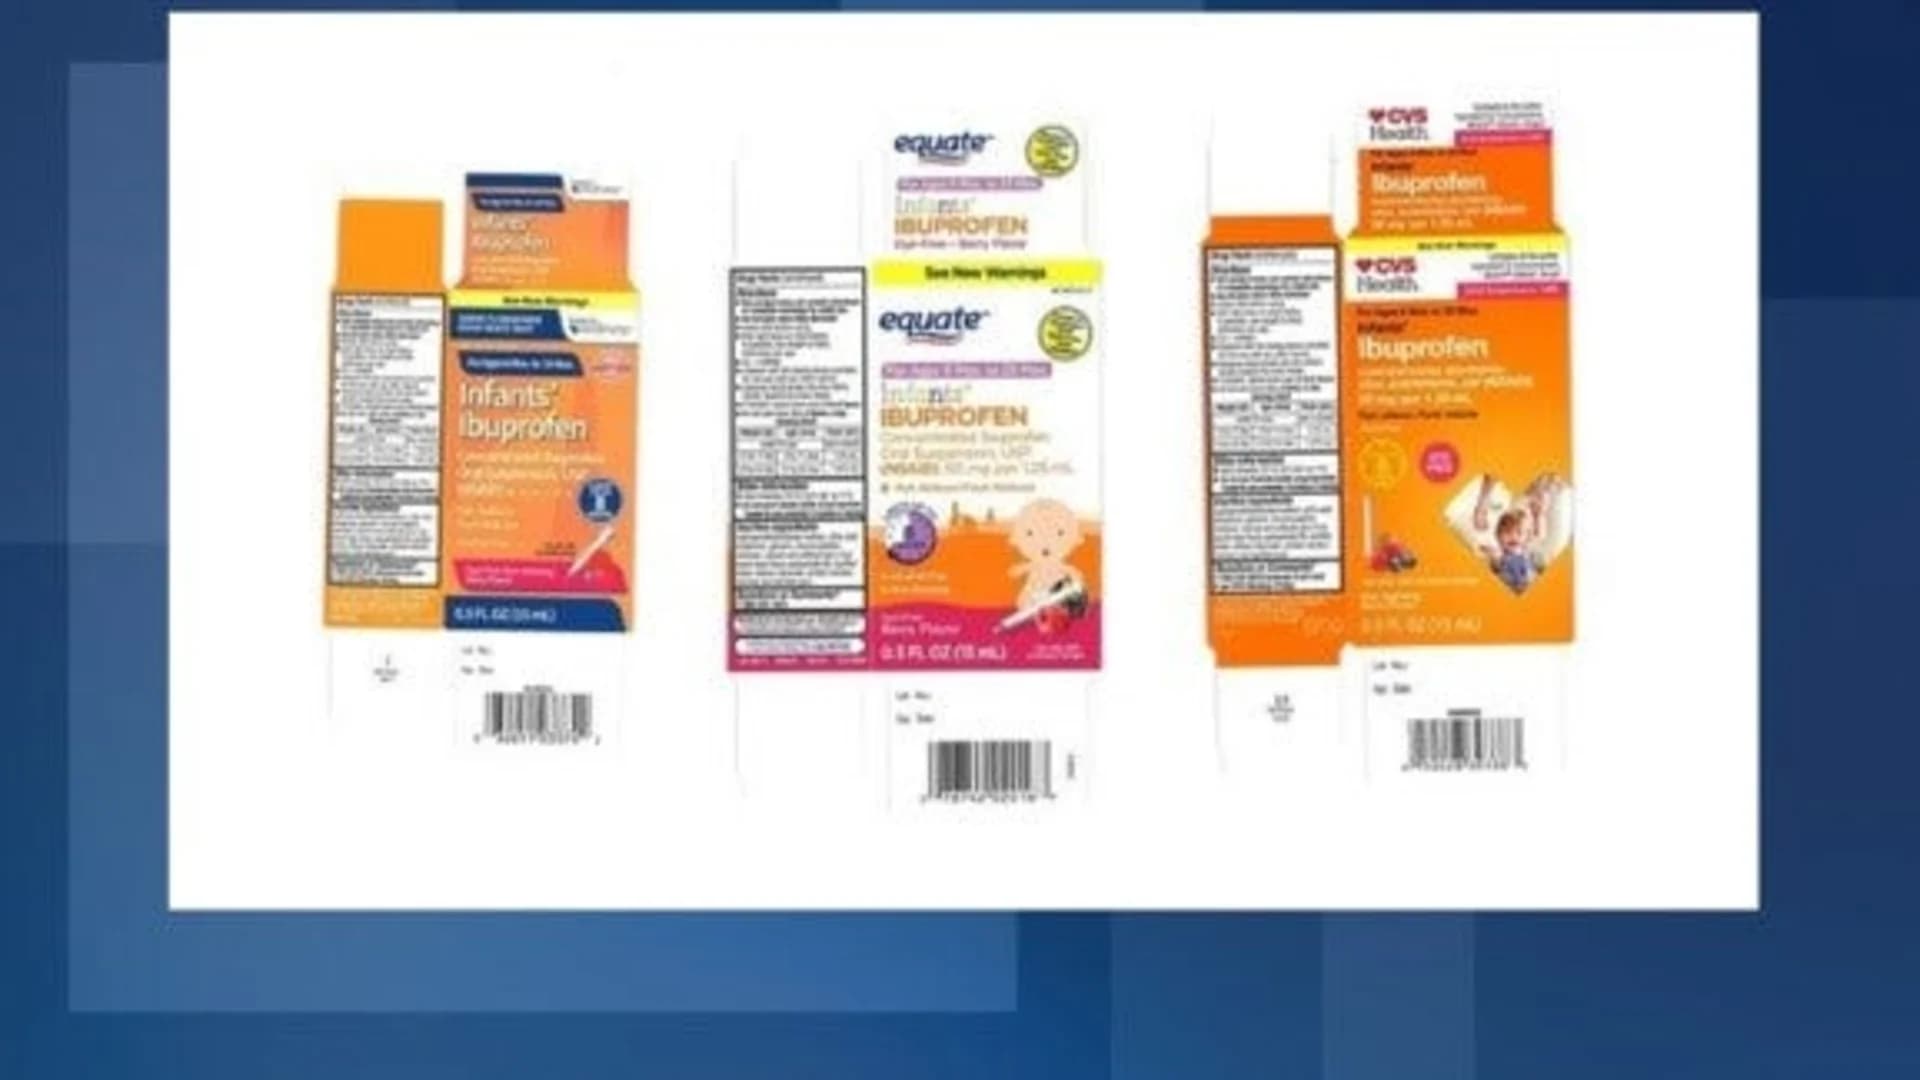 New Jersey-based company recalls lots of infant ibuprofen